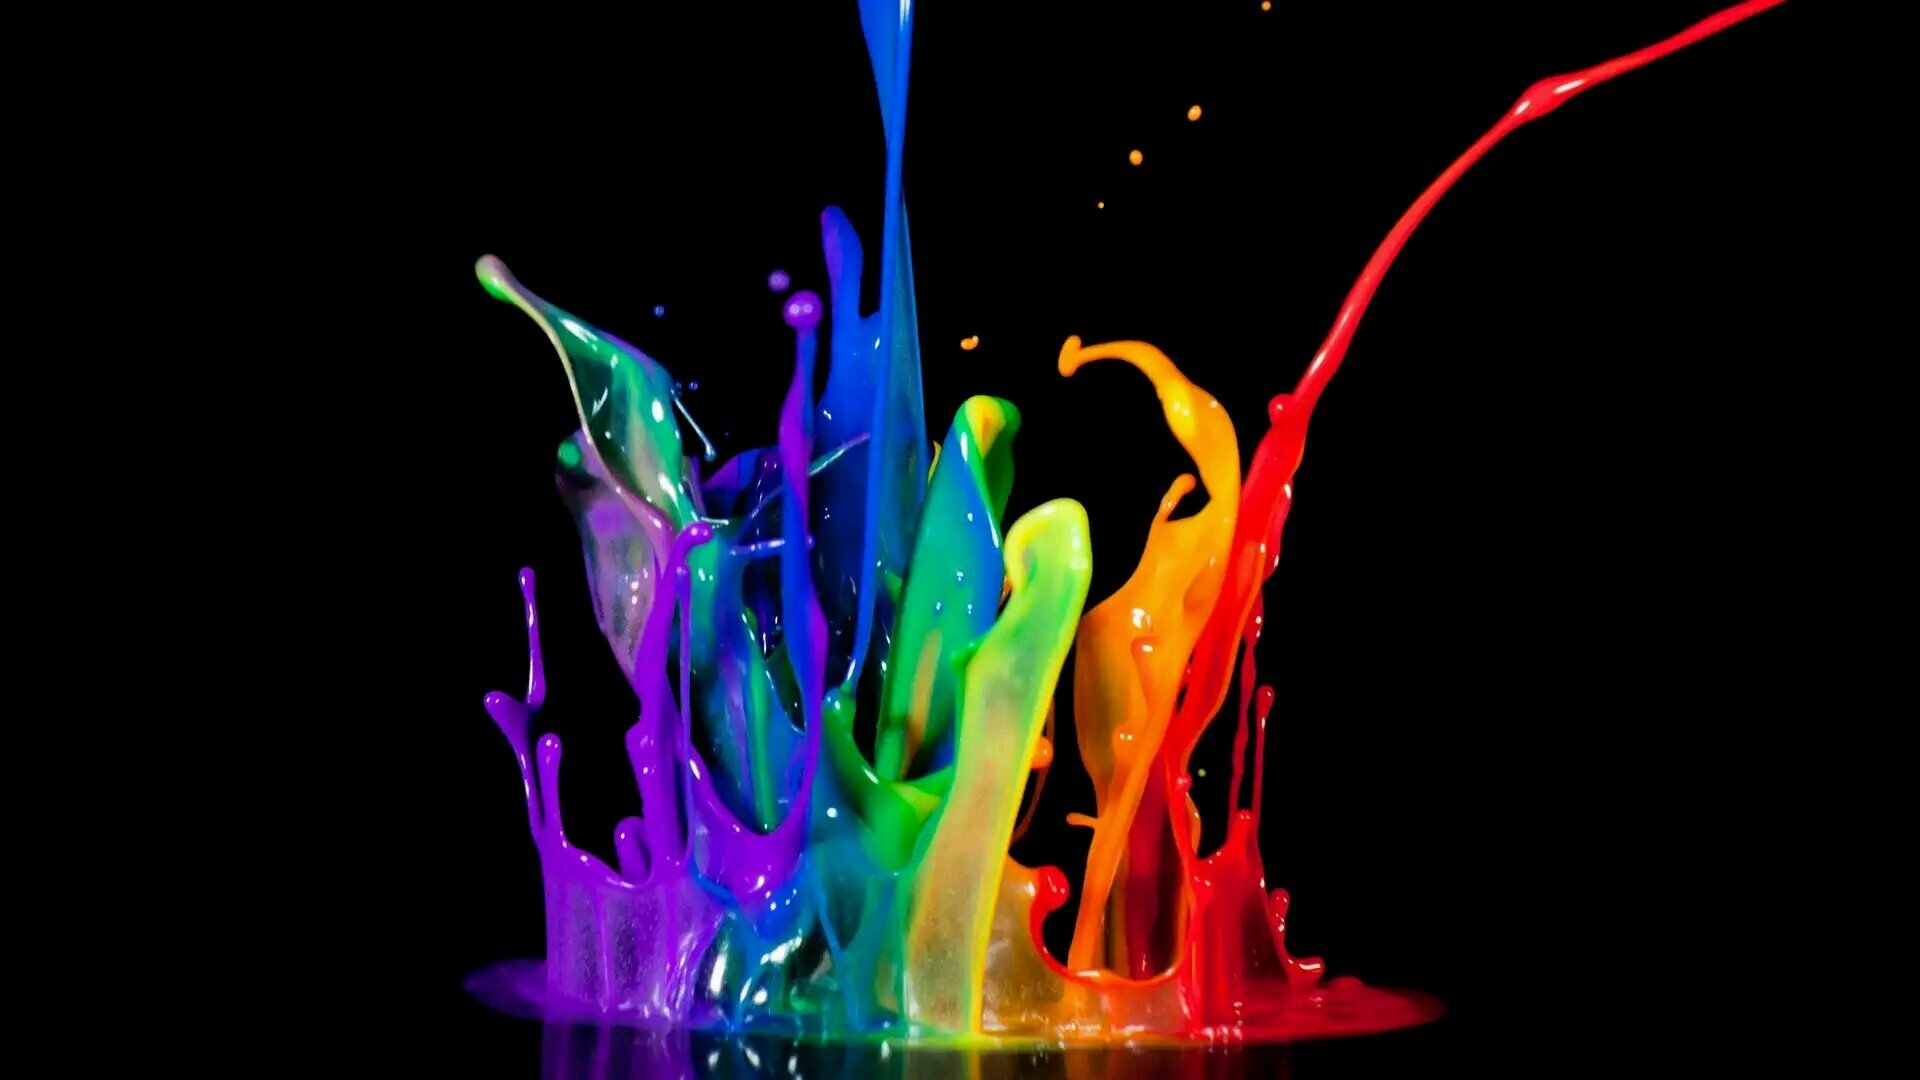 Microsoft Pride Wallpaper 4K Colorful Waves Black background 2932